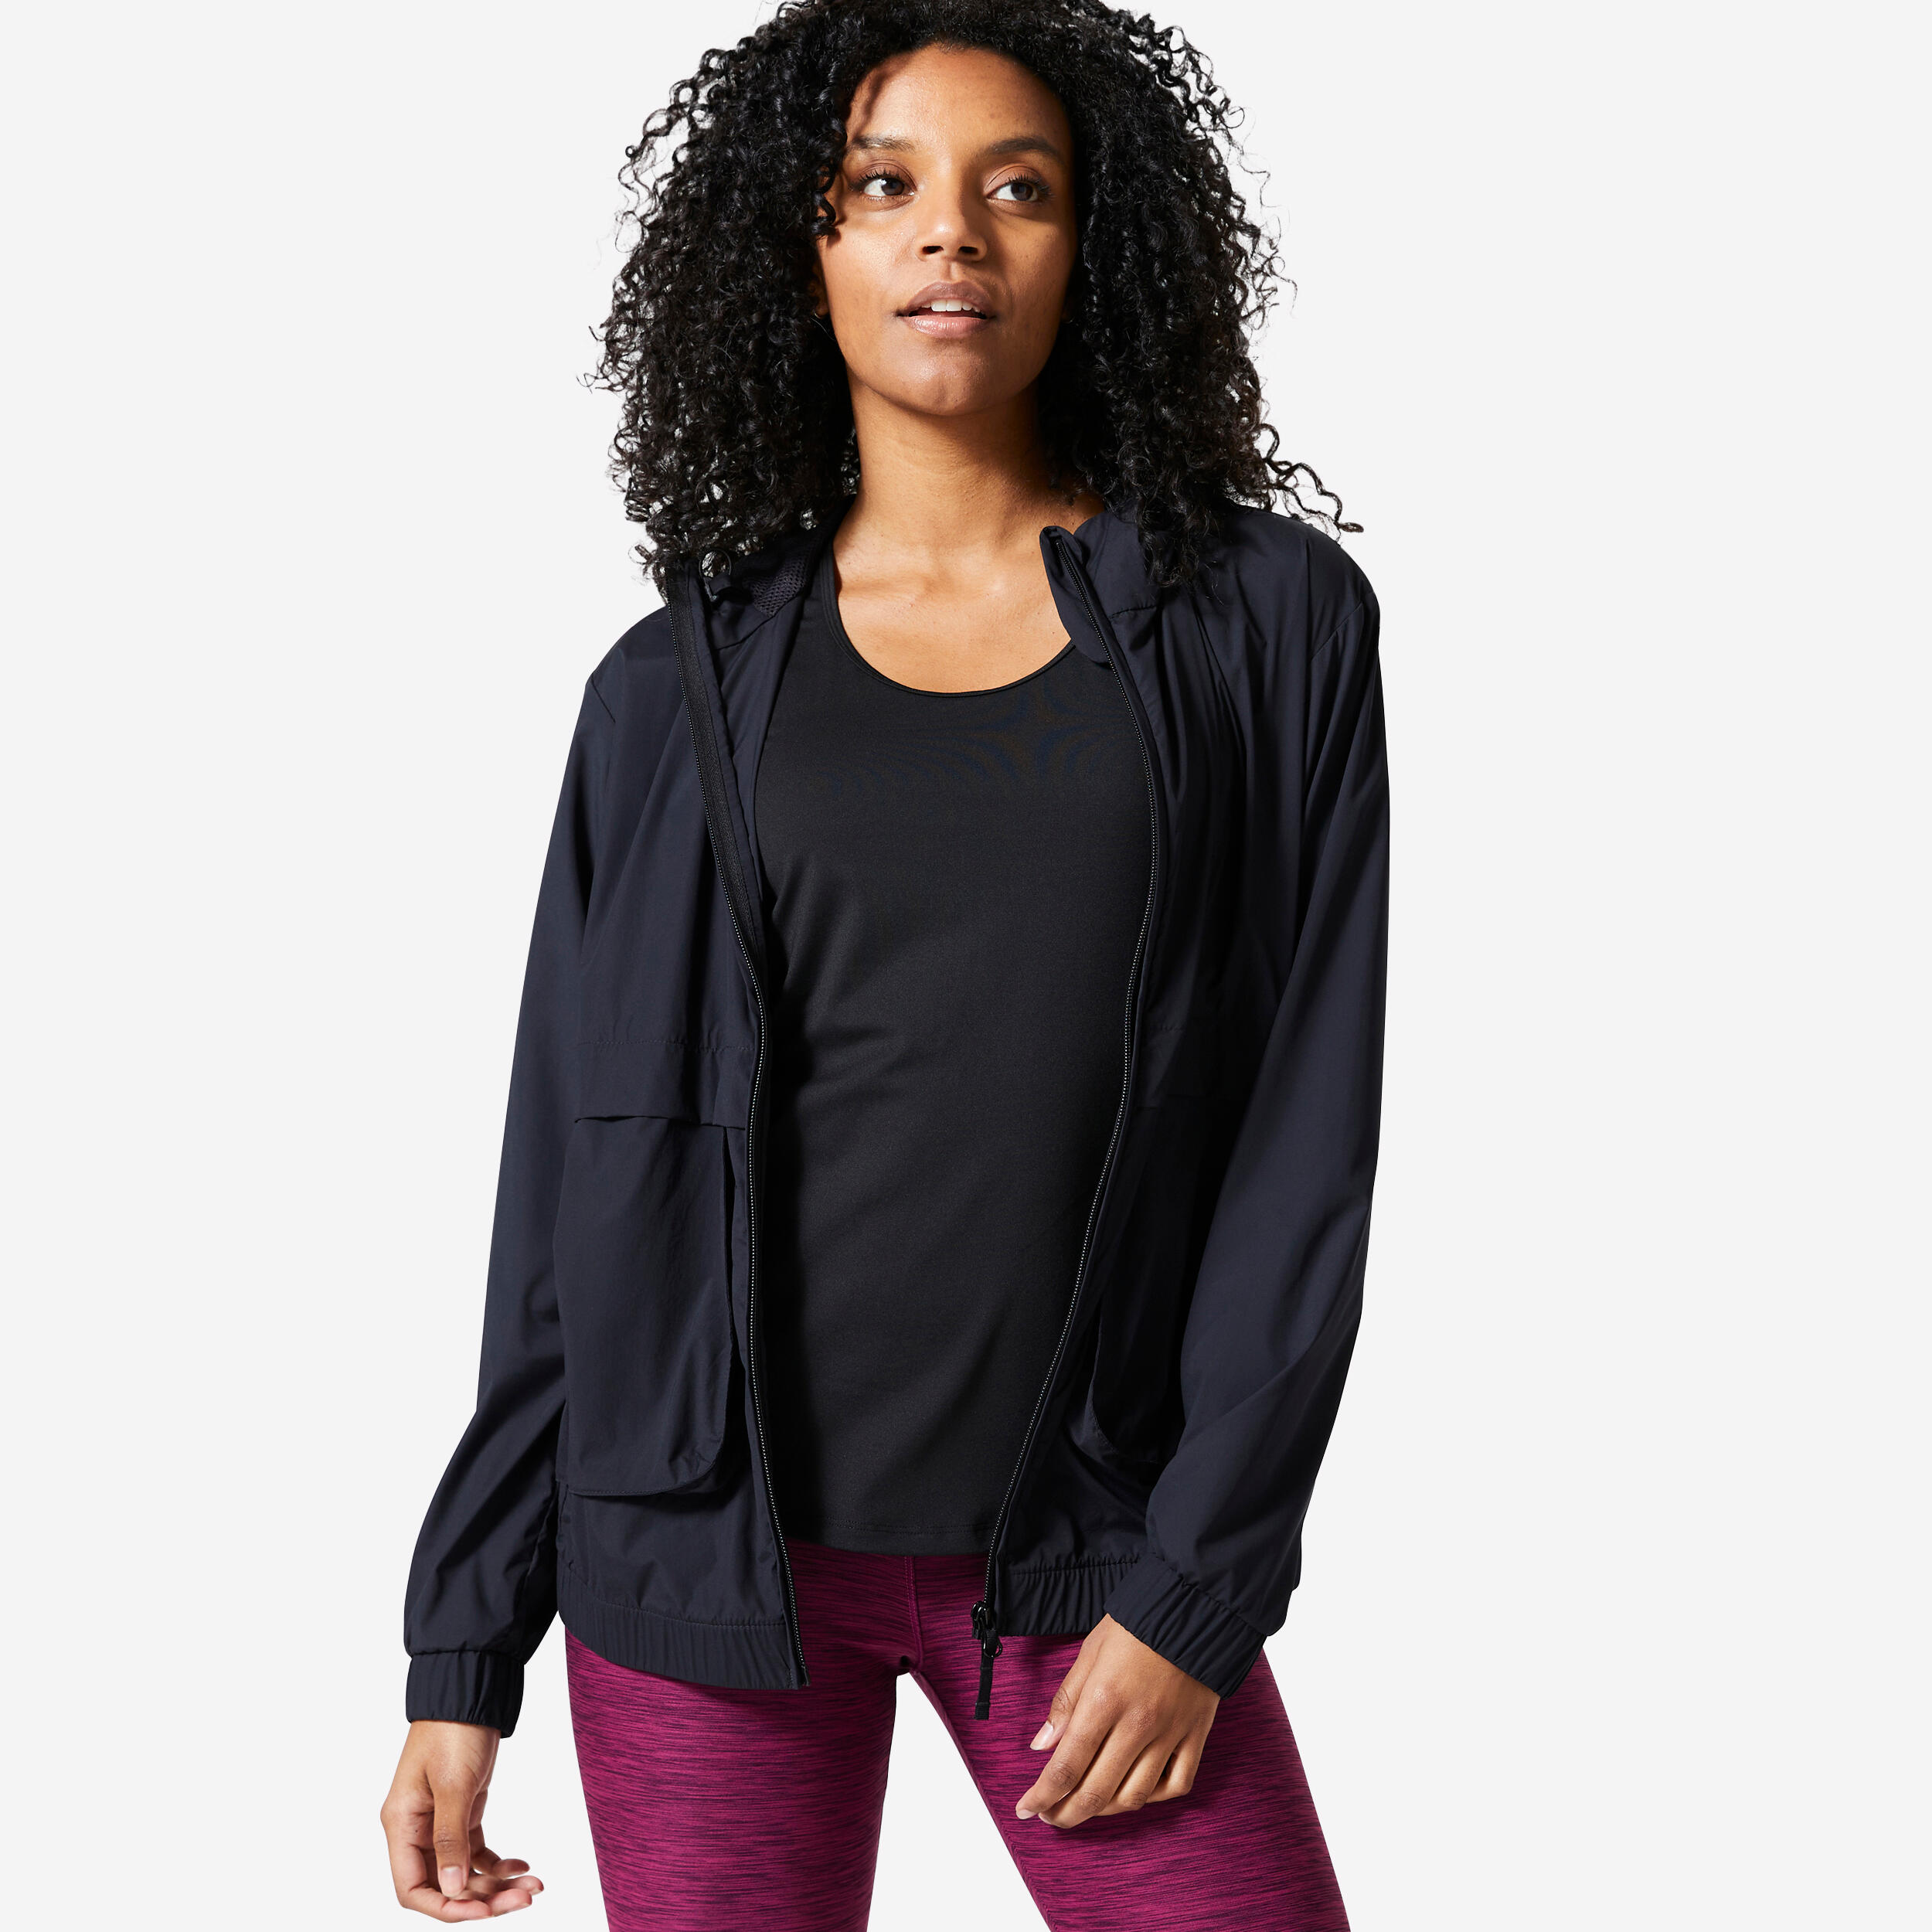 Asics Women's Alana Jacket Activewear Workout Blue White Zip NWT $58 Choose  Sz | eBay